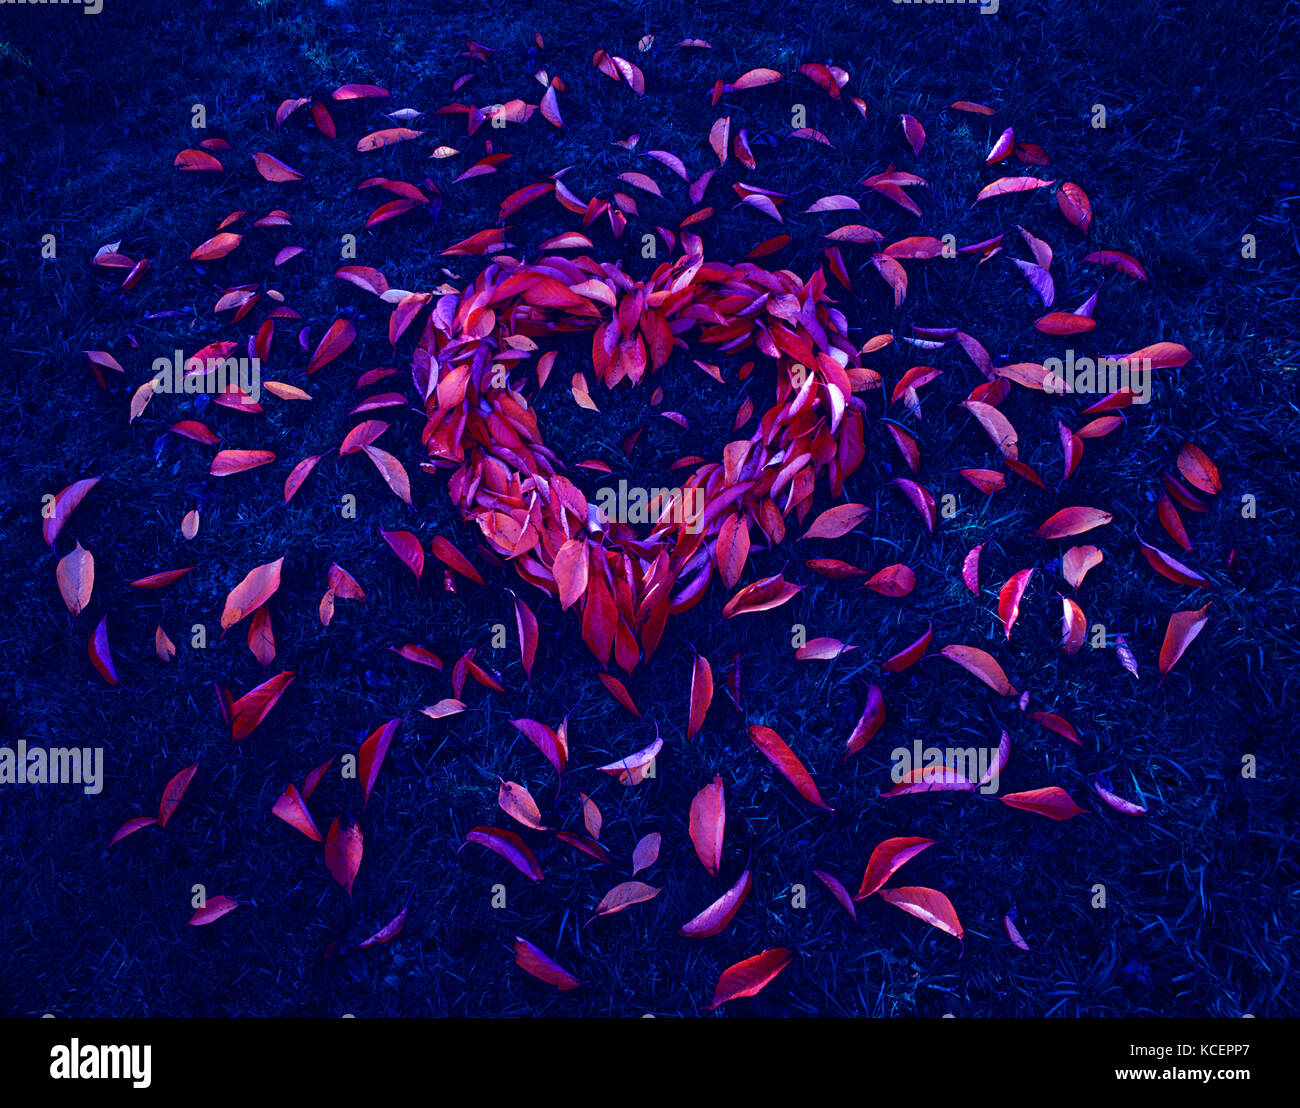 Heart shape made from fallen autumn leaves arranged on grass. False colour. Stock Photo